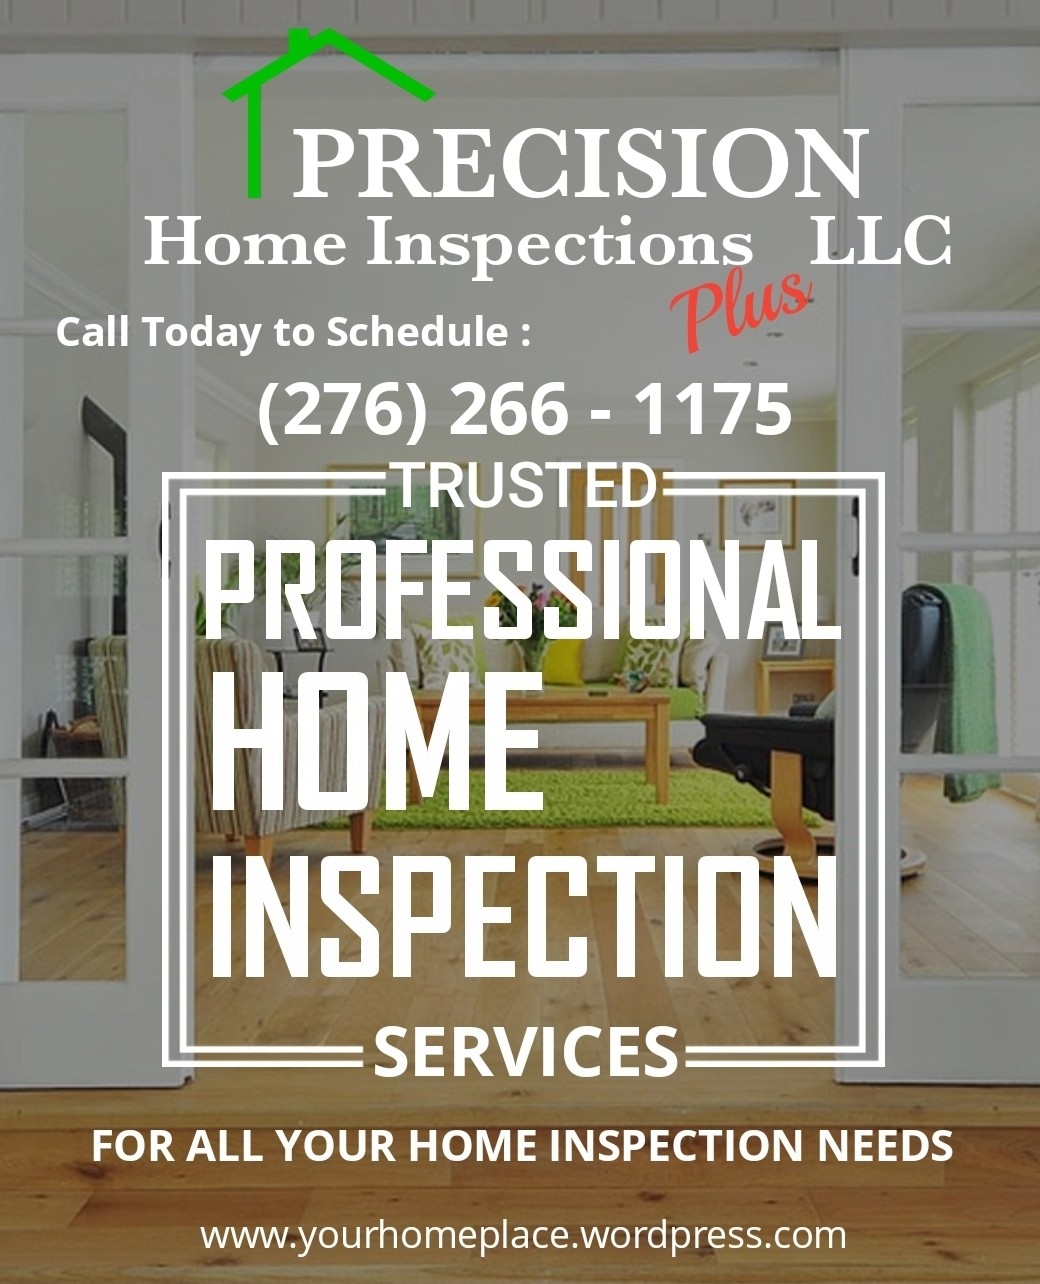 Precision Home Inspections Plus LLC 624 S Main St, Rural Retreat Virginia 24368